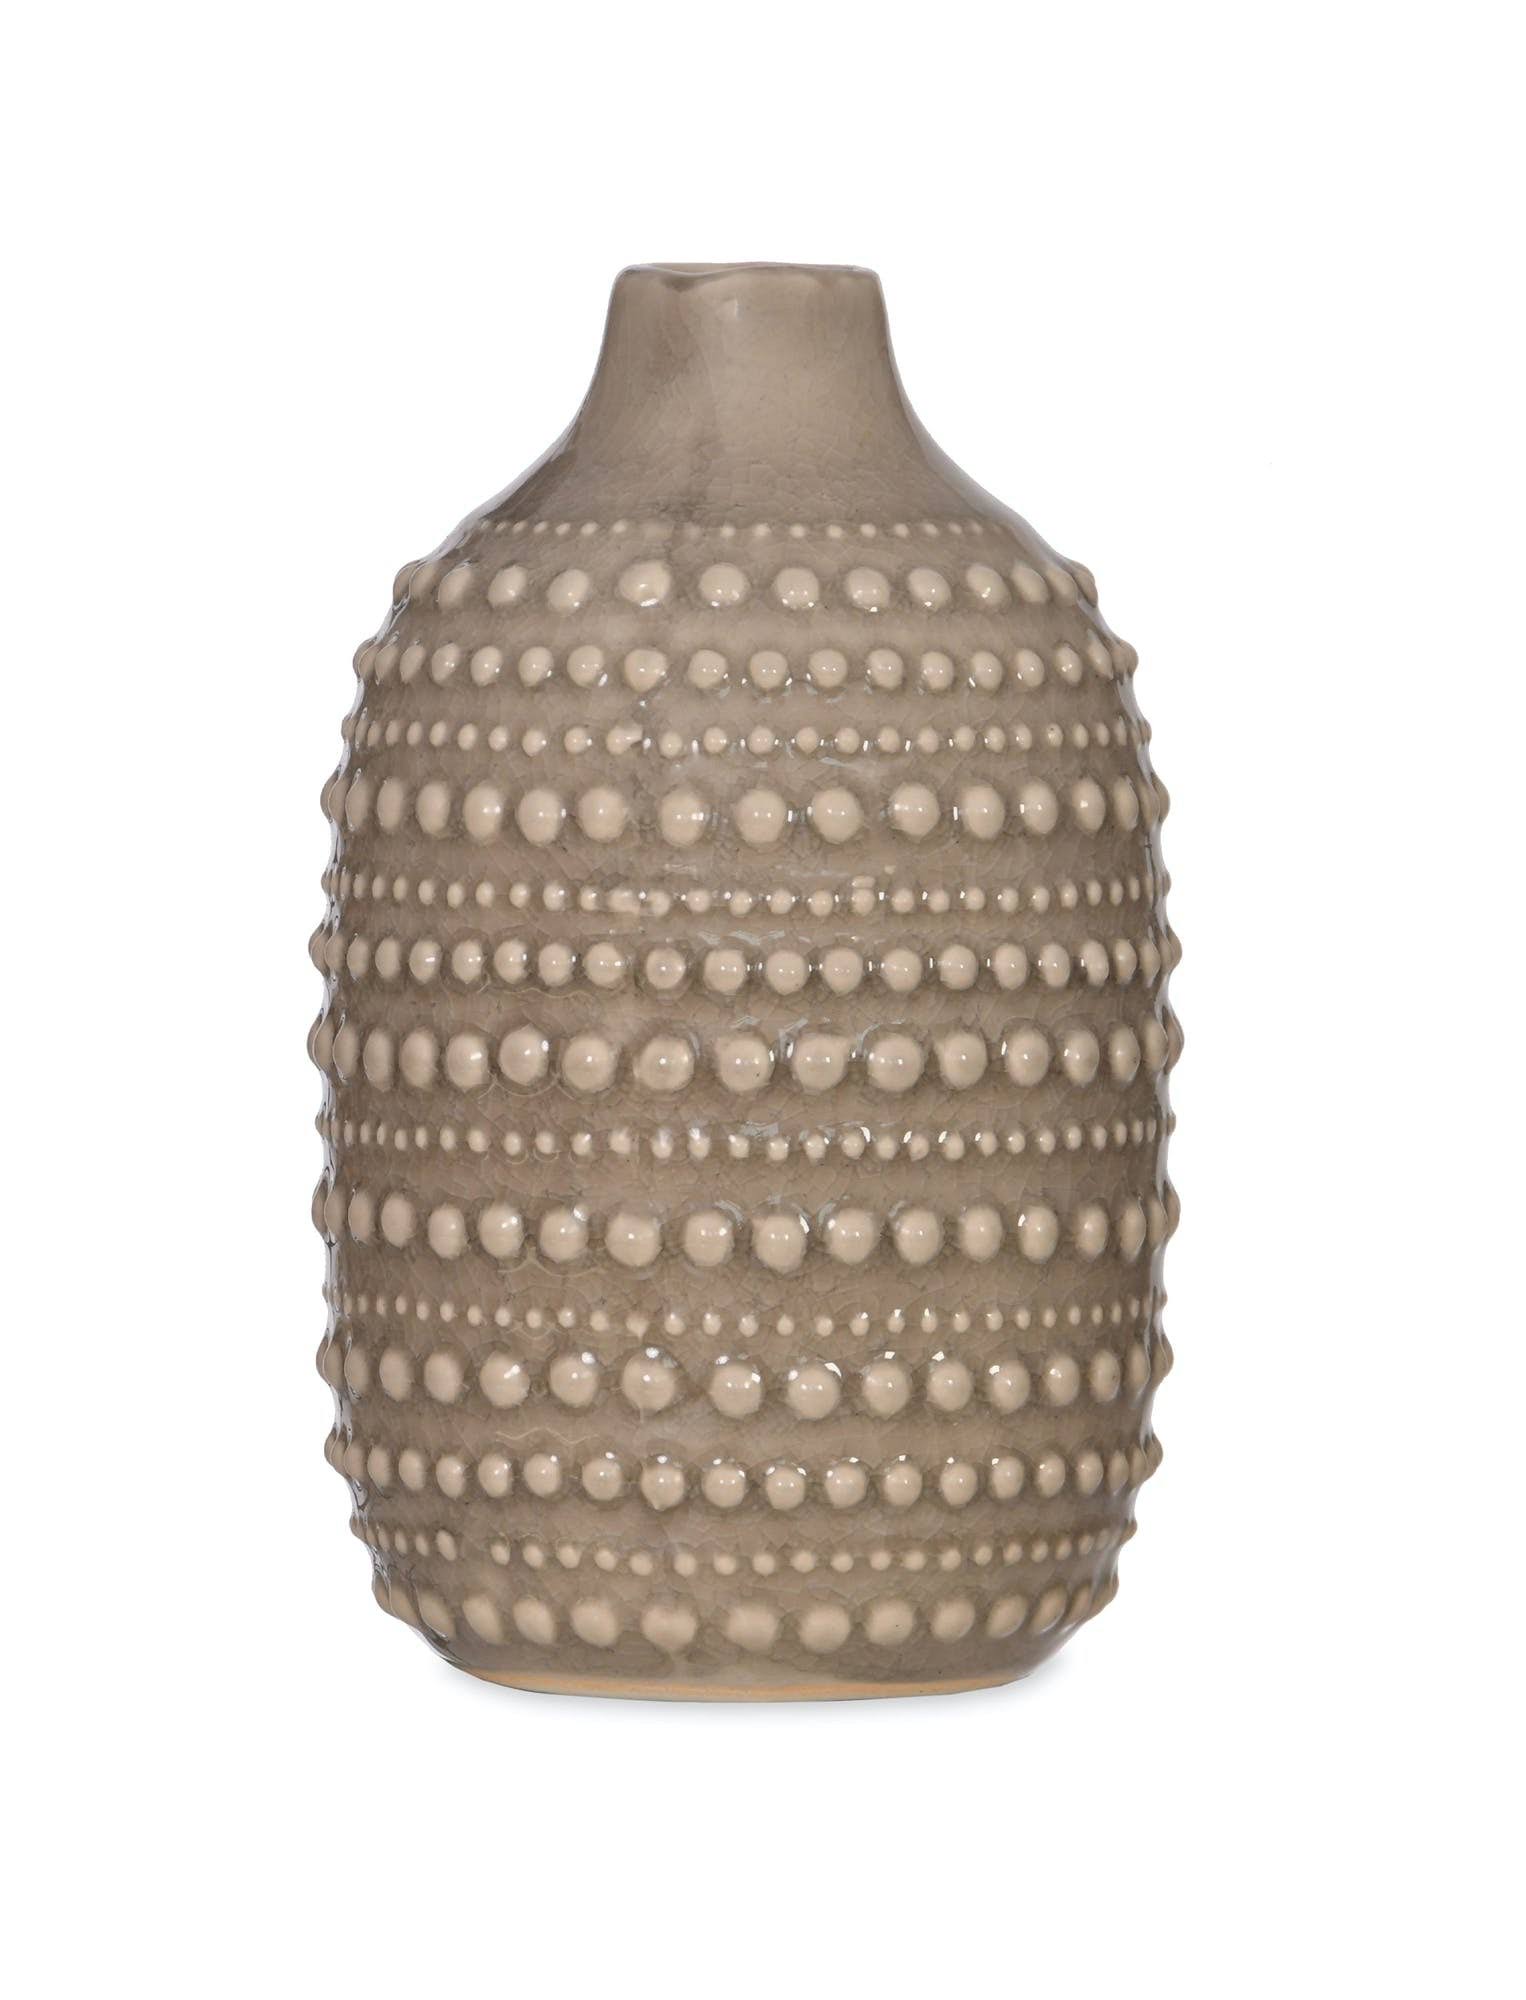 Garden Trading Castello Bottle Large Stone Vase